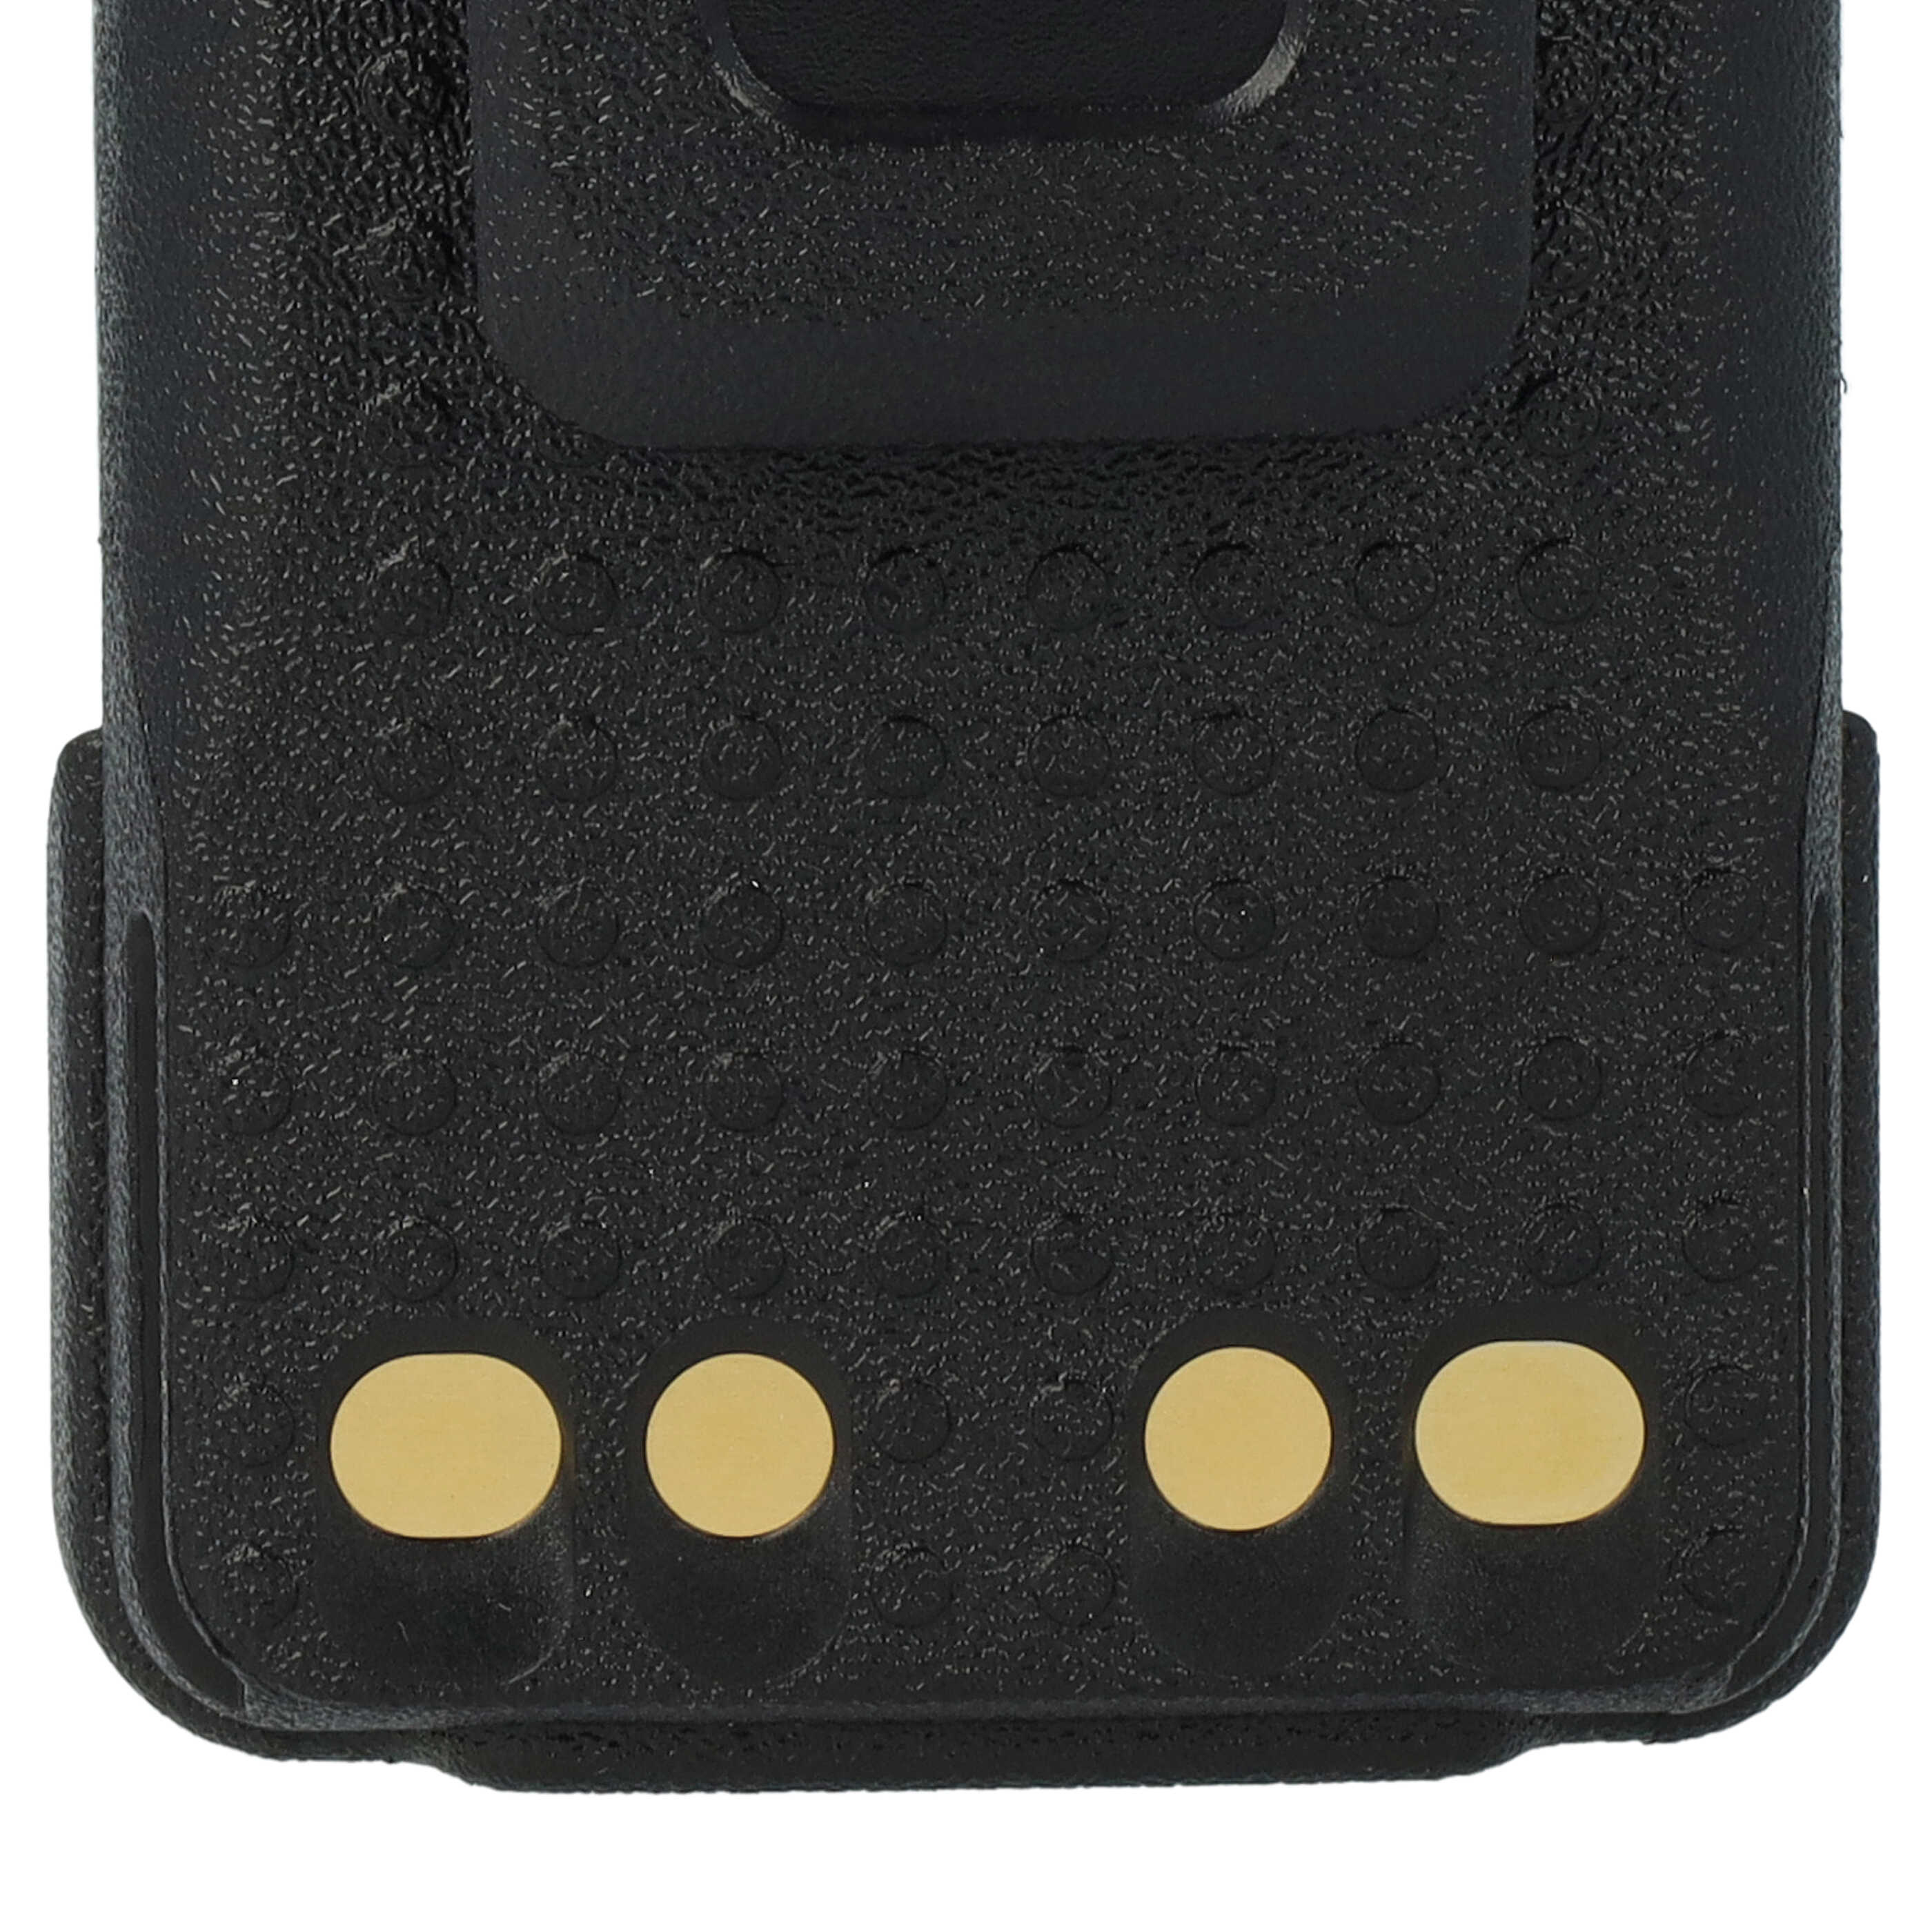 Akumulator do radiotelefonu zamiennik Motorola PMNN4406, PMNN4406BR - 2600 mAh 7,4 V Li-Ion + klips na pasek